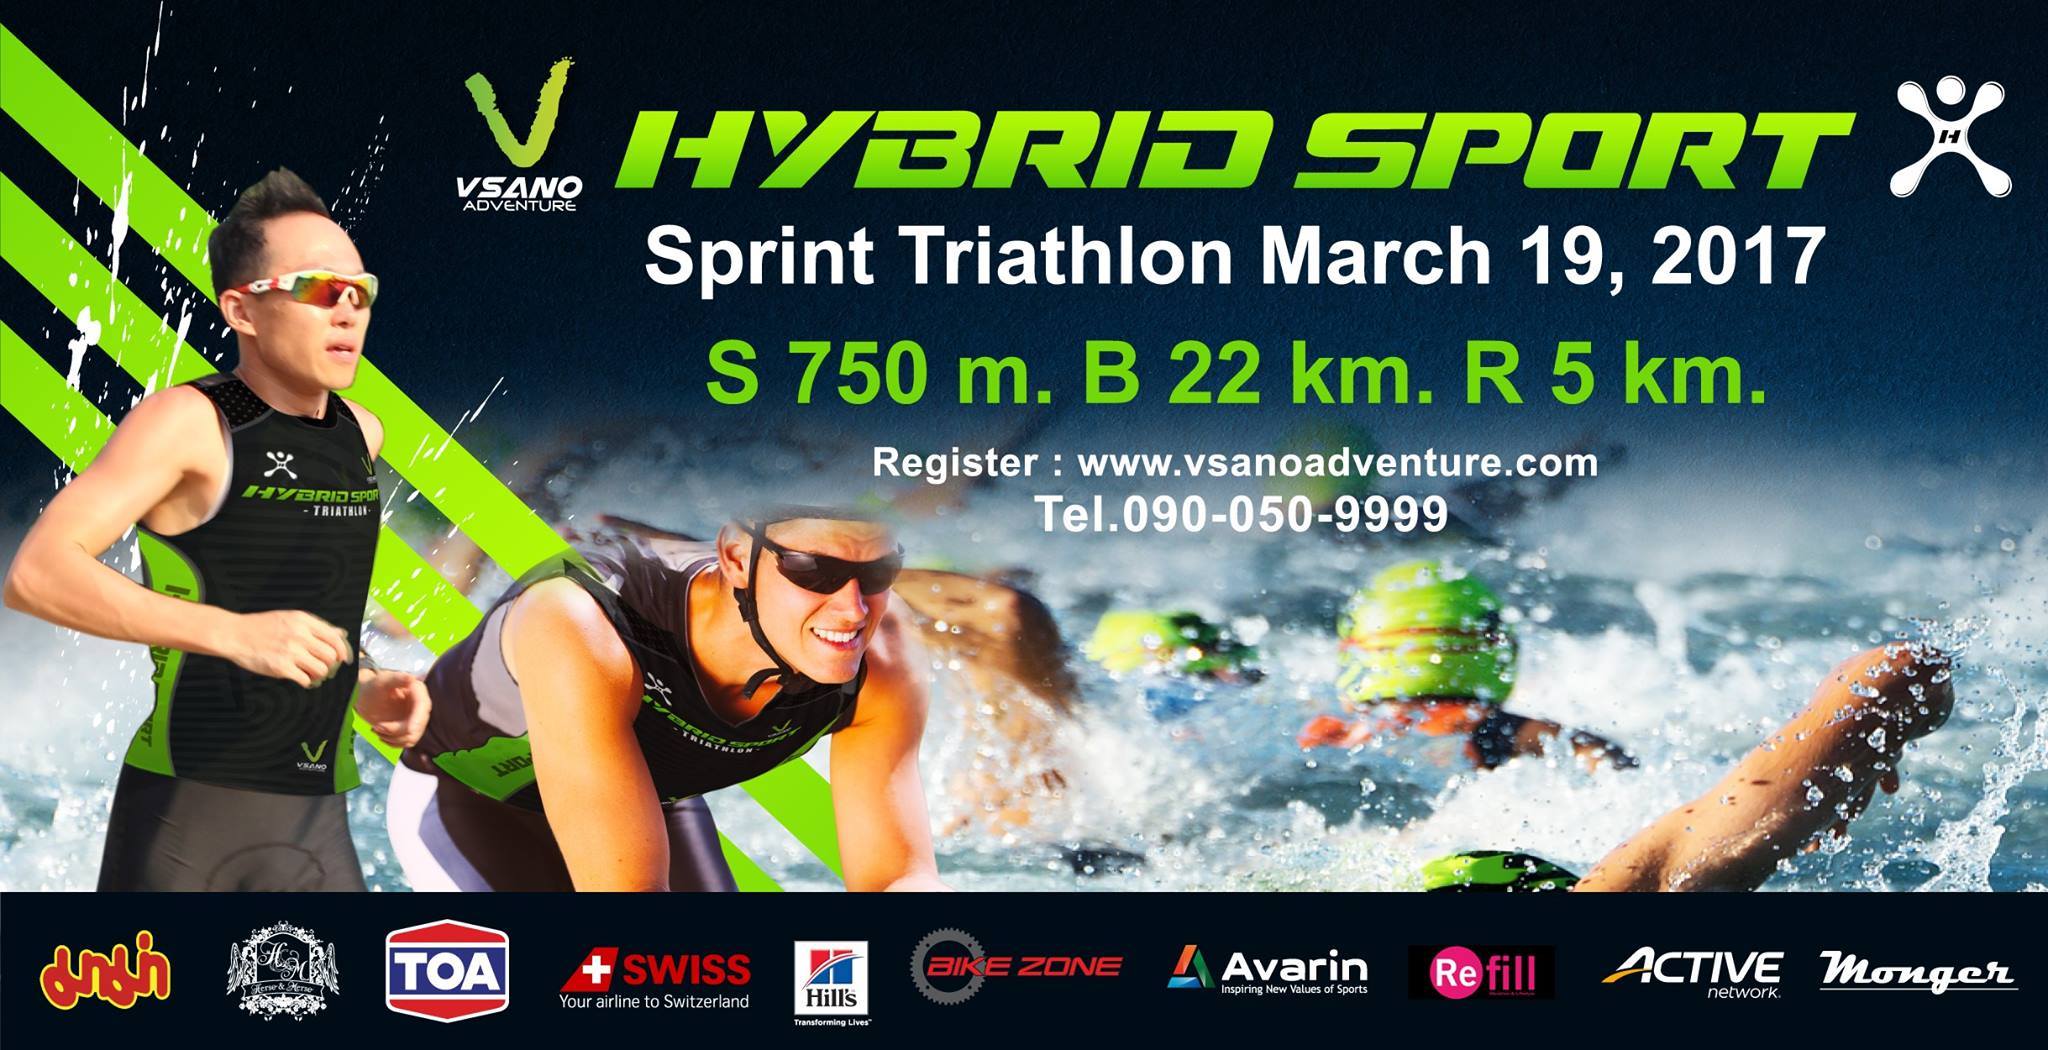 Hybrid SPORT Sprint Triathlon